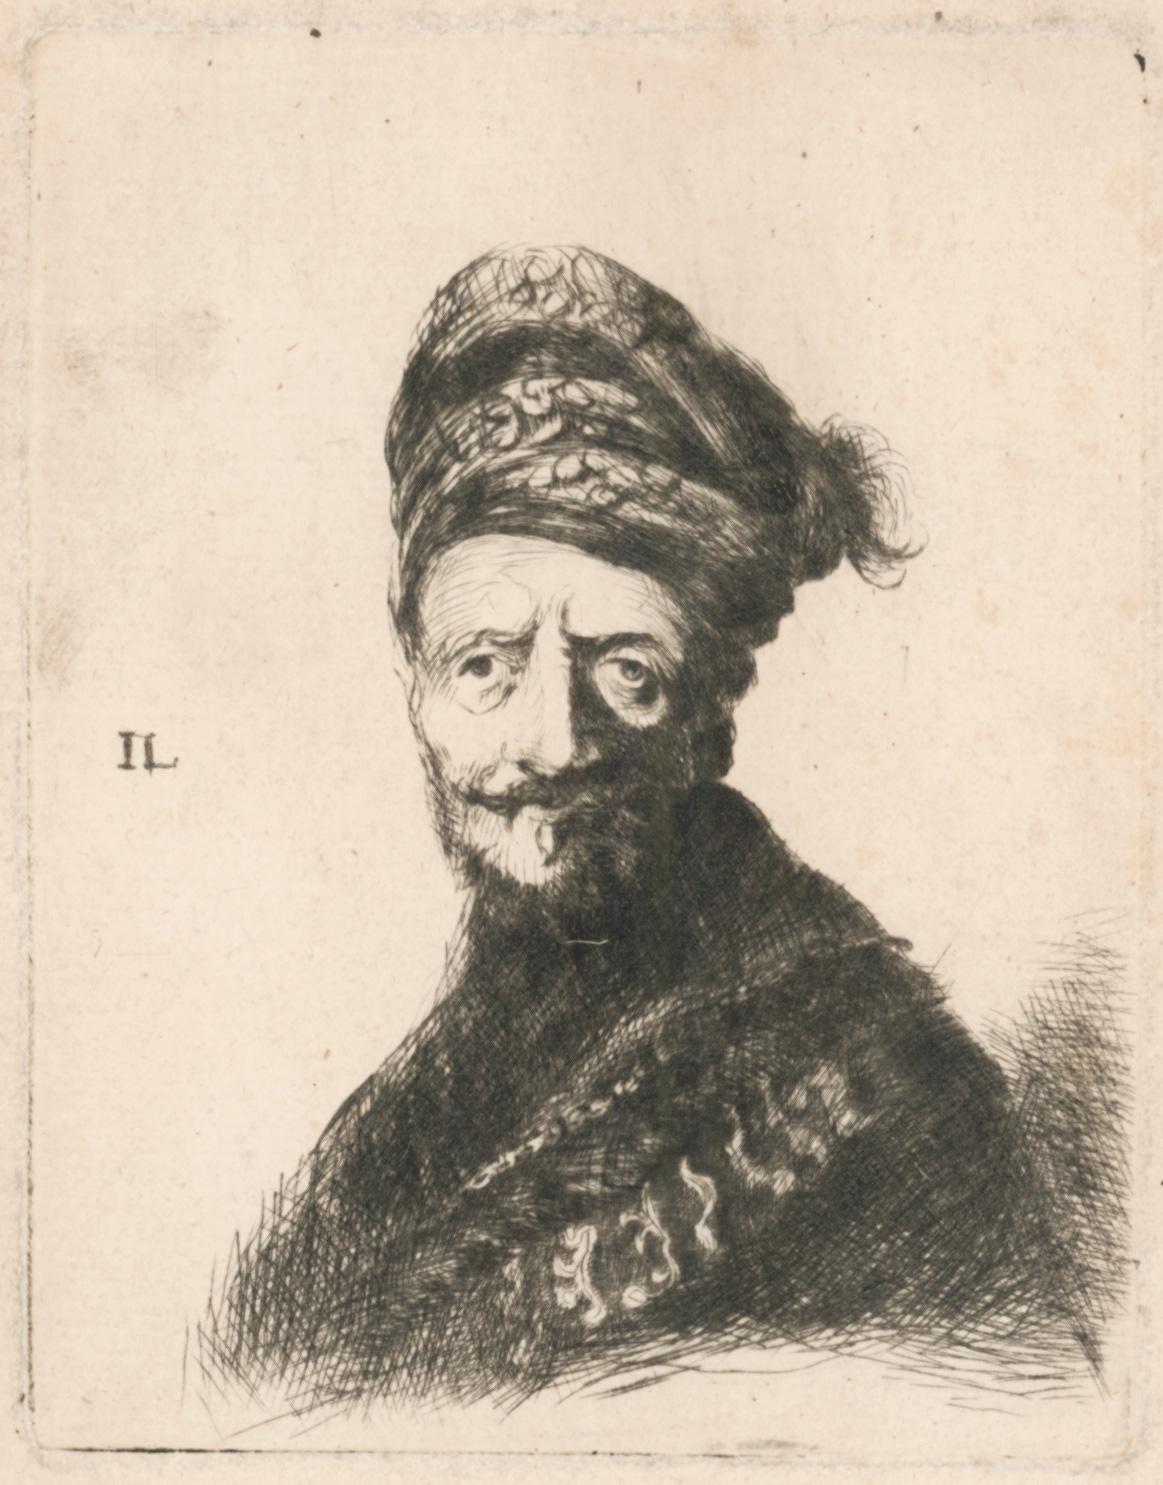 Rembrandt van Rijn Portrait Print - Bearded man in turban and fur